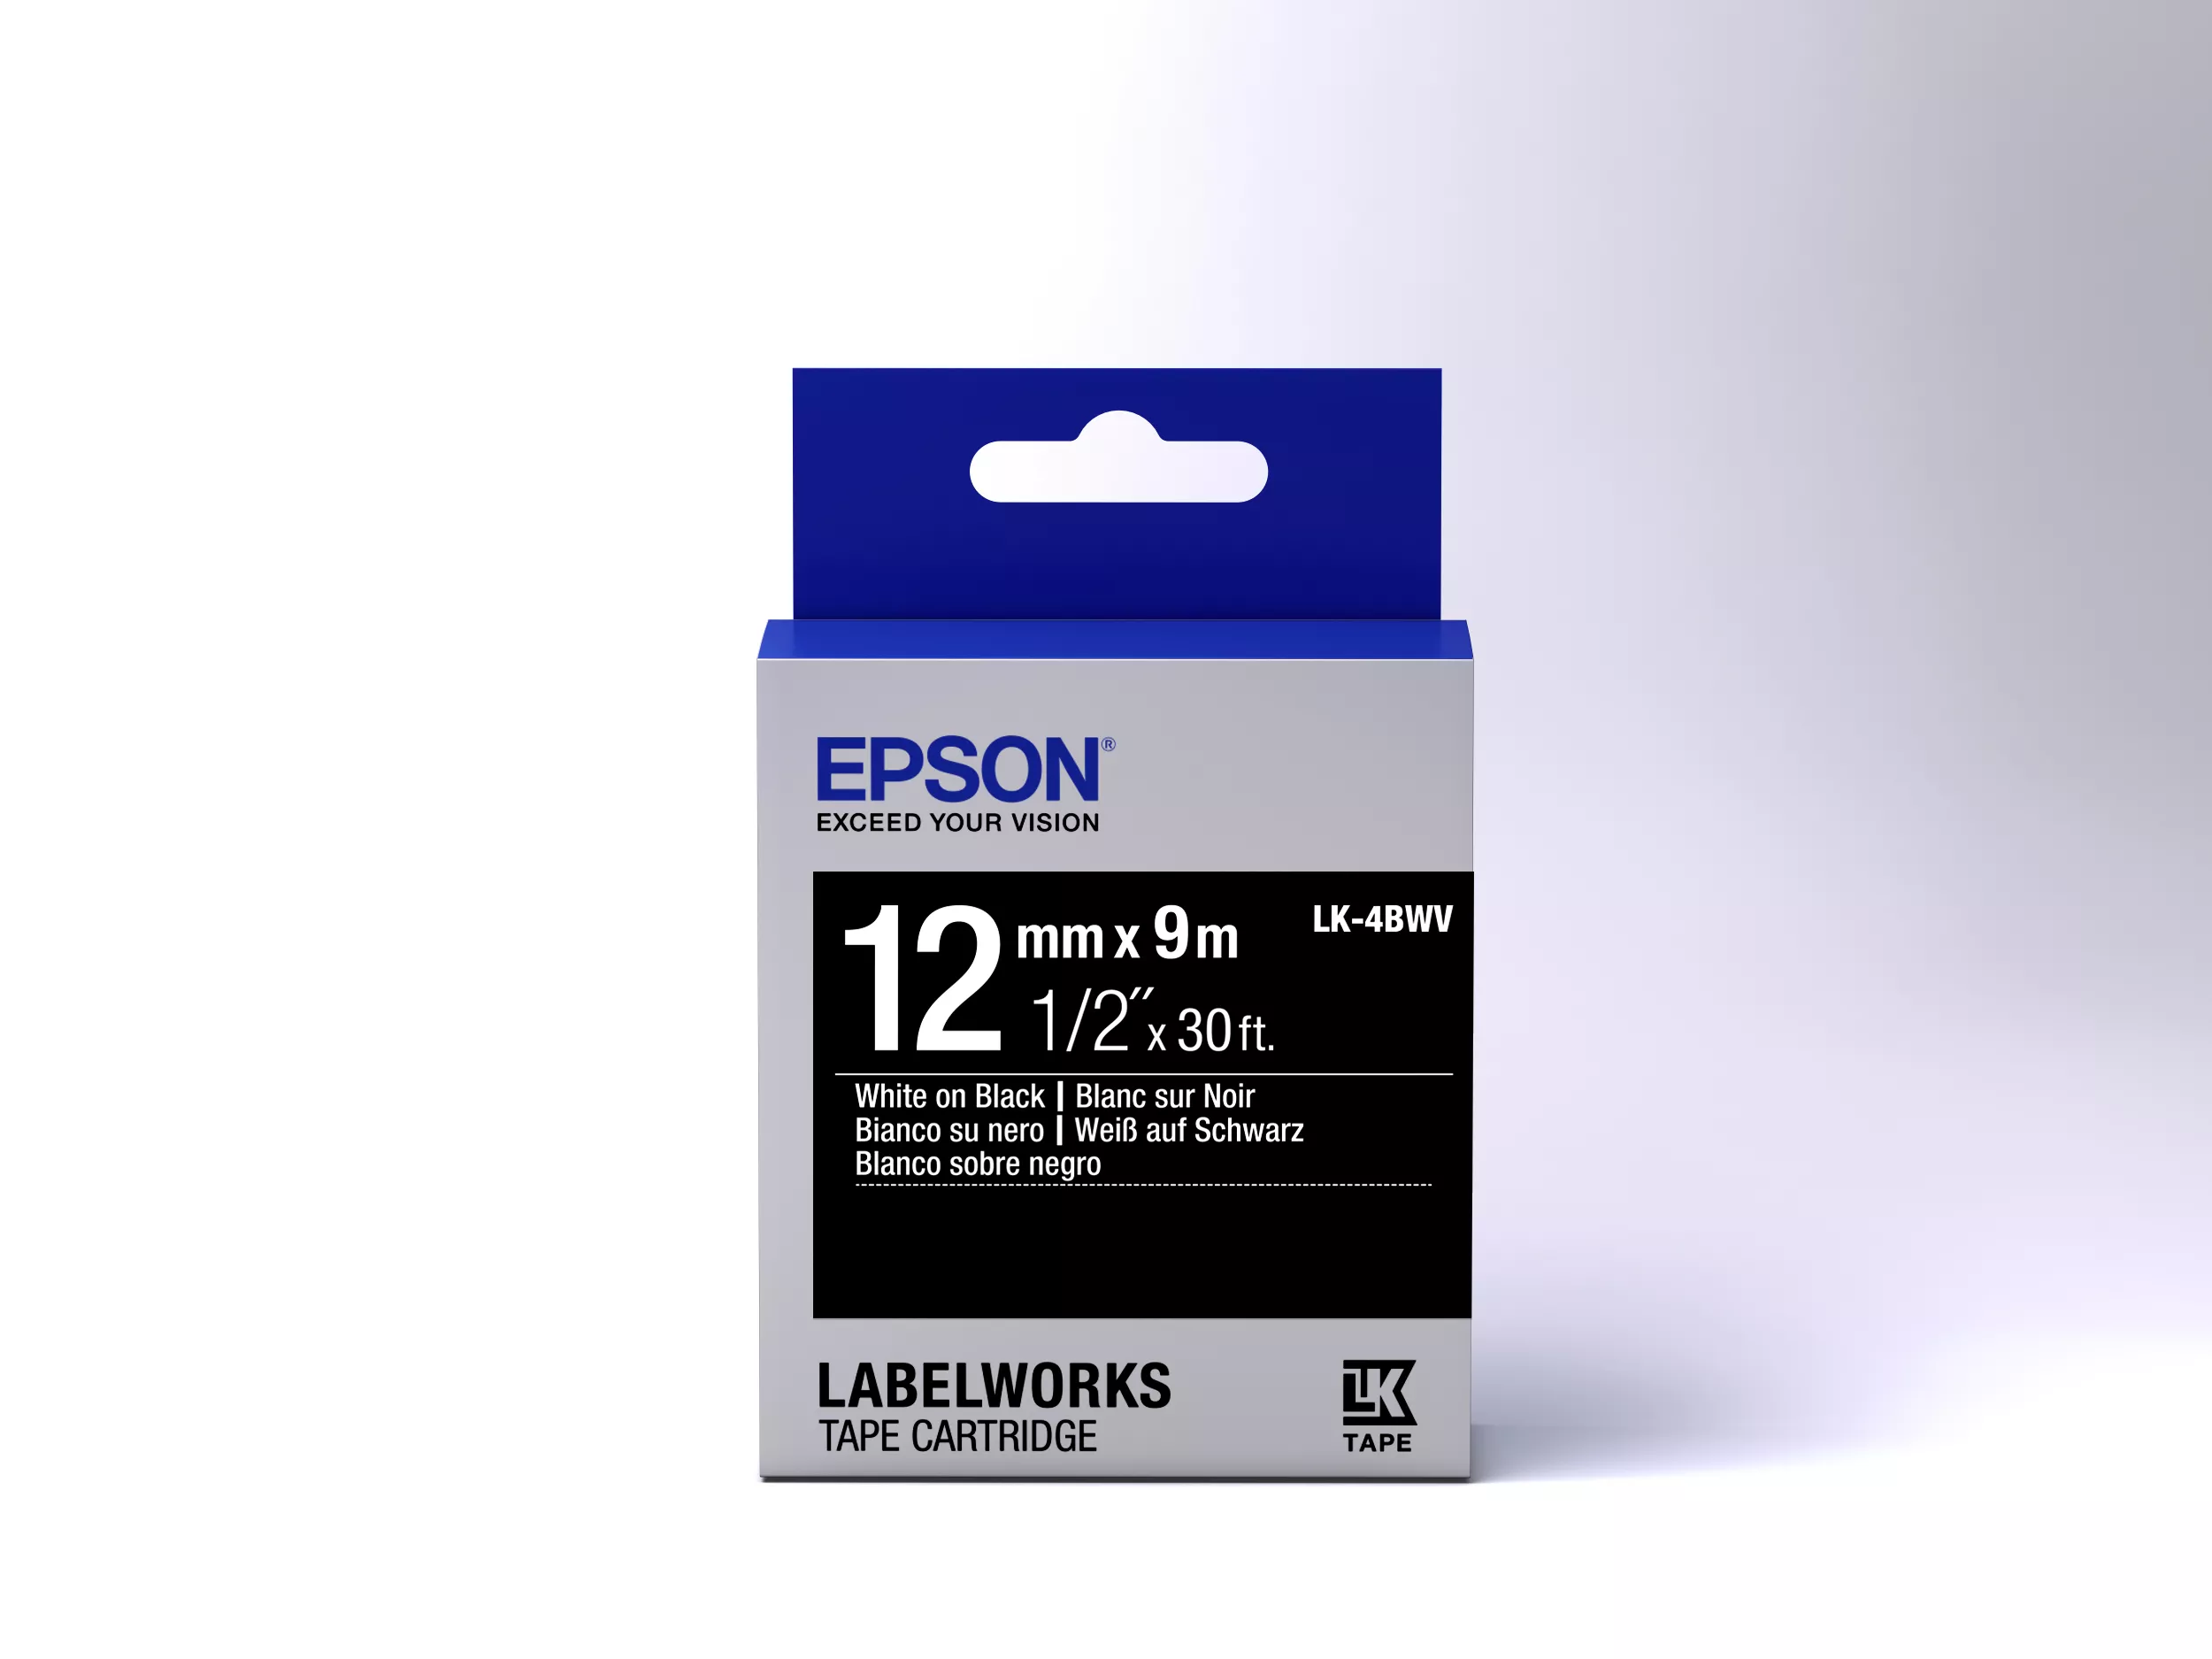 Vente EPSON LK-4BWV Vif Blanc/Noir 12/9 Epson au meilleur prix - visuel 2